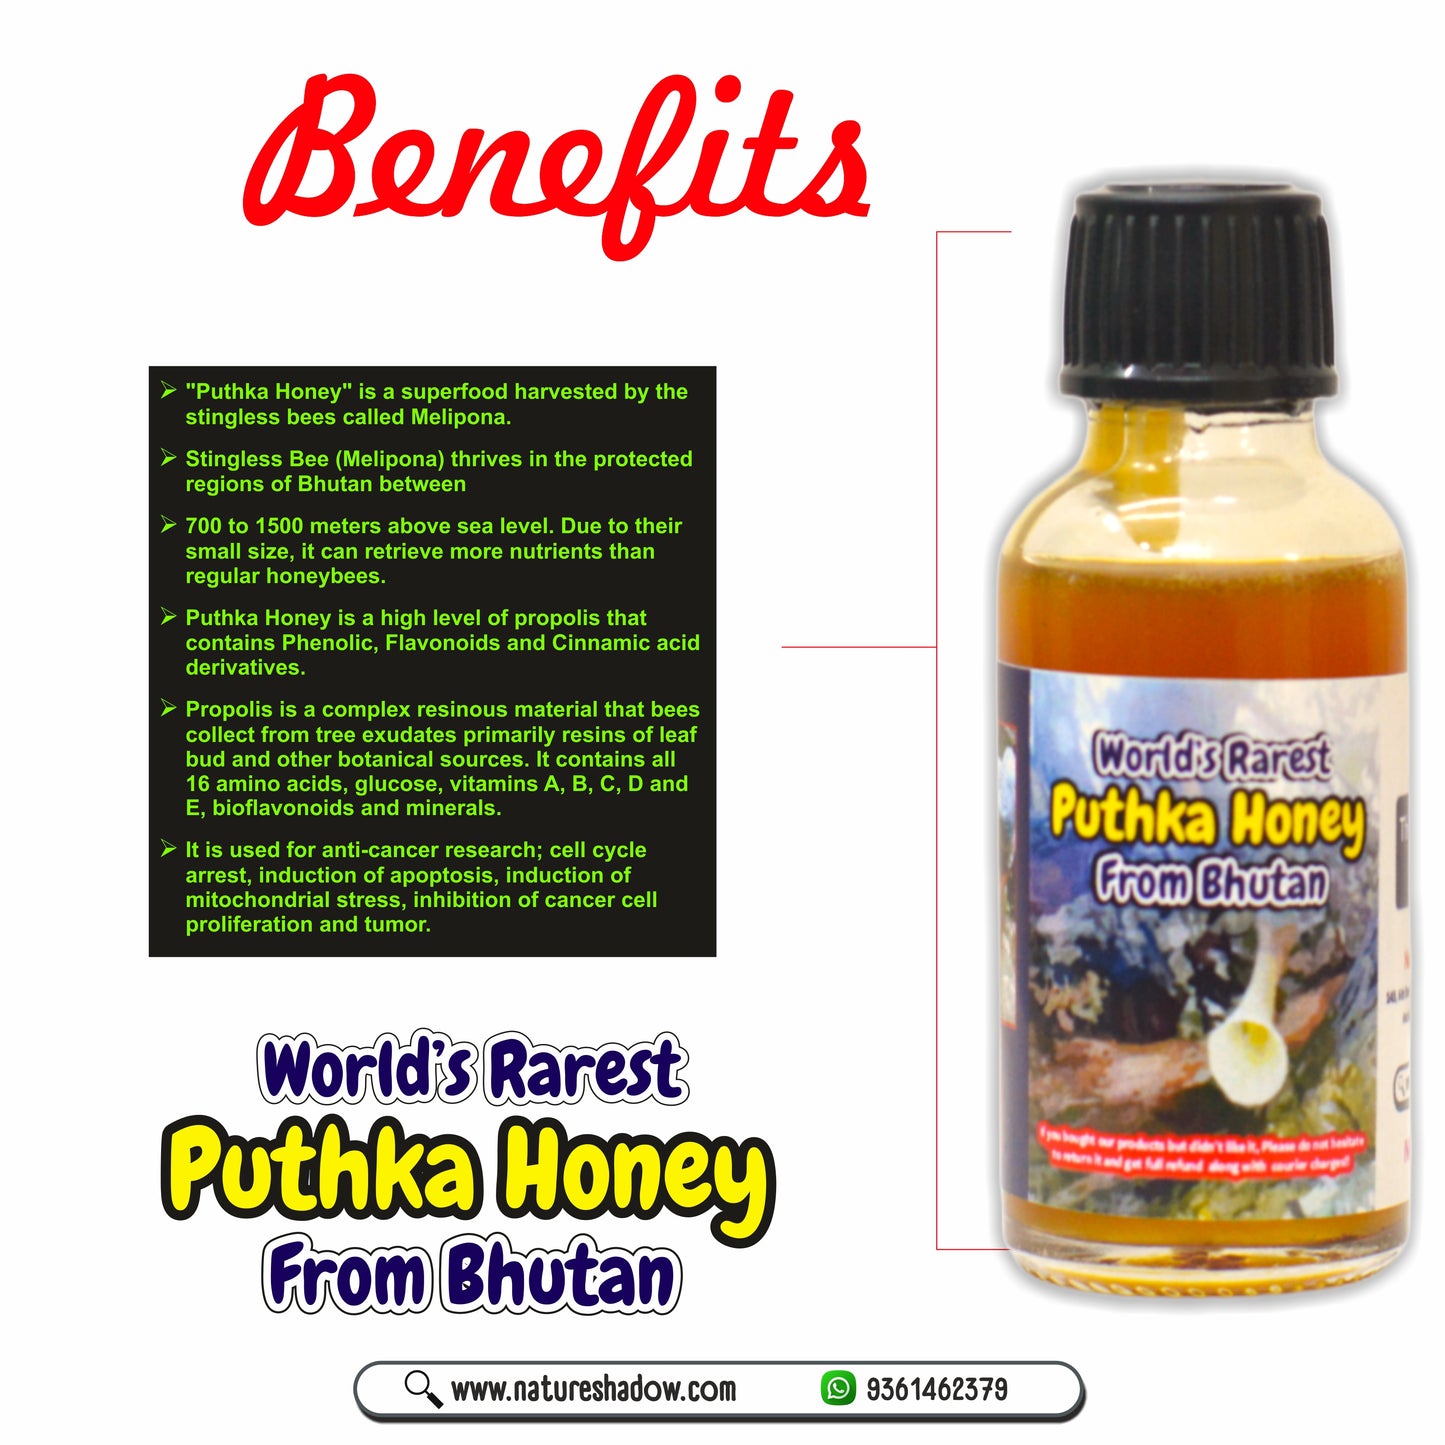 World's Rarest Puthka Honey From Bhutan - 40 Grams